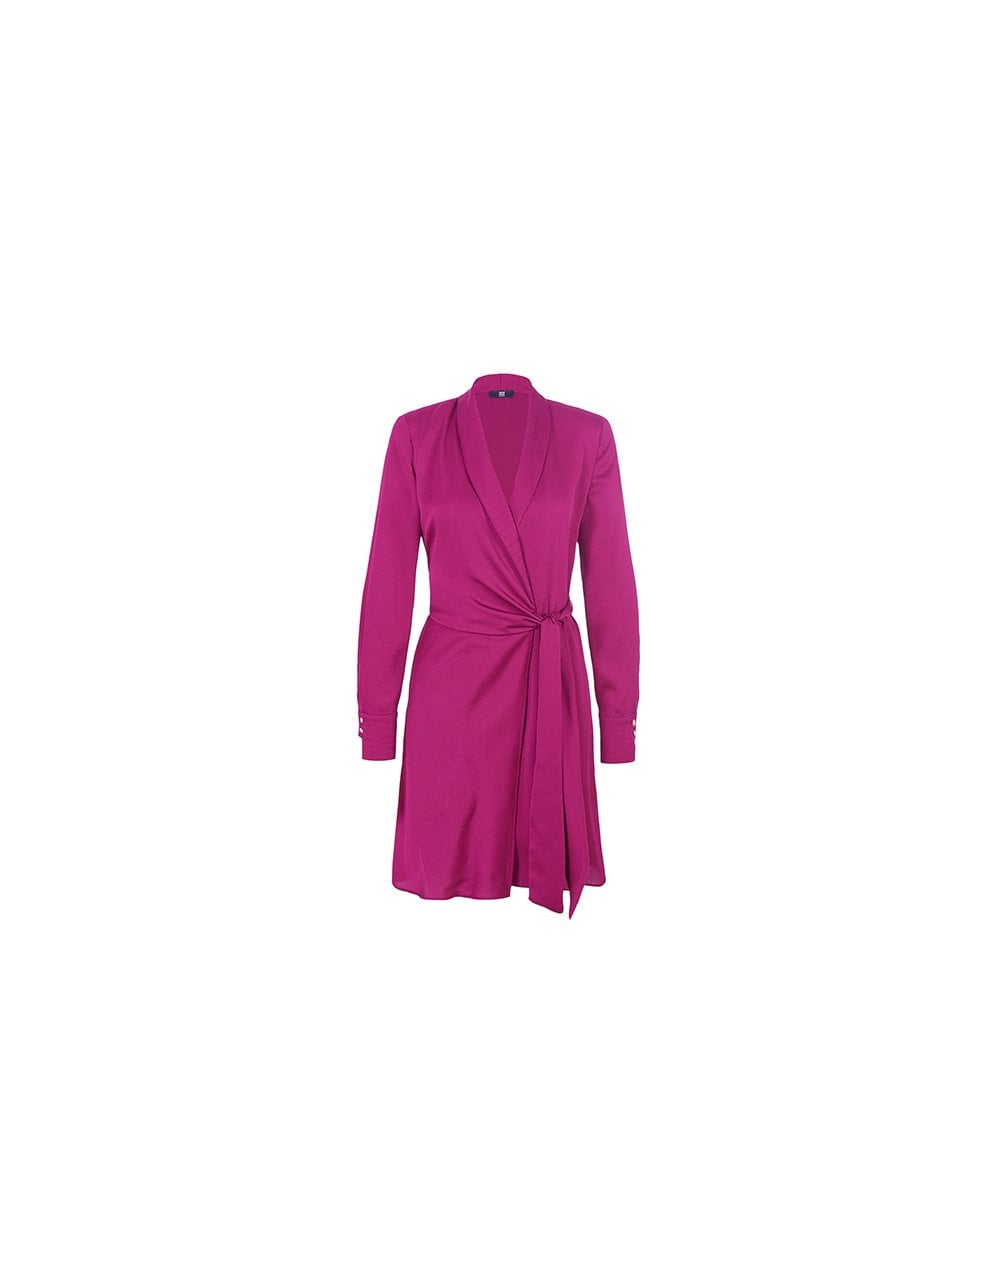 Riani Riani Bright Wrap Short Dress Col: 326 Cerise Pink, Size: 10